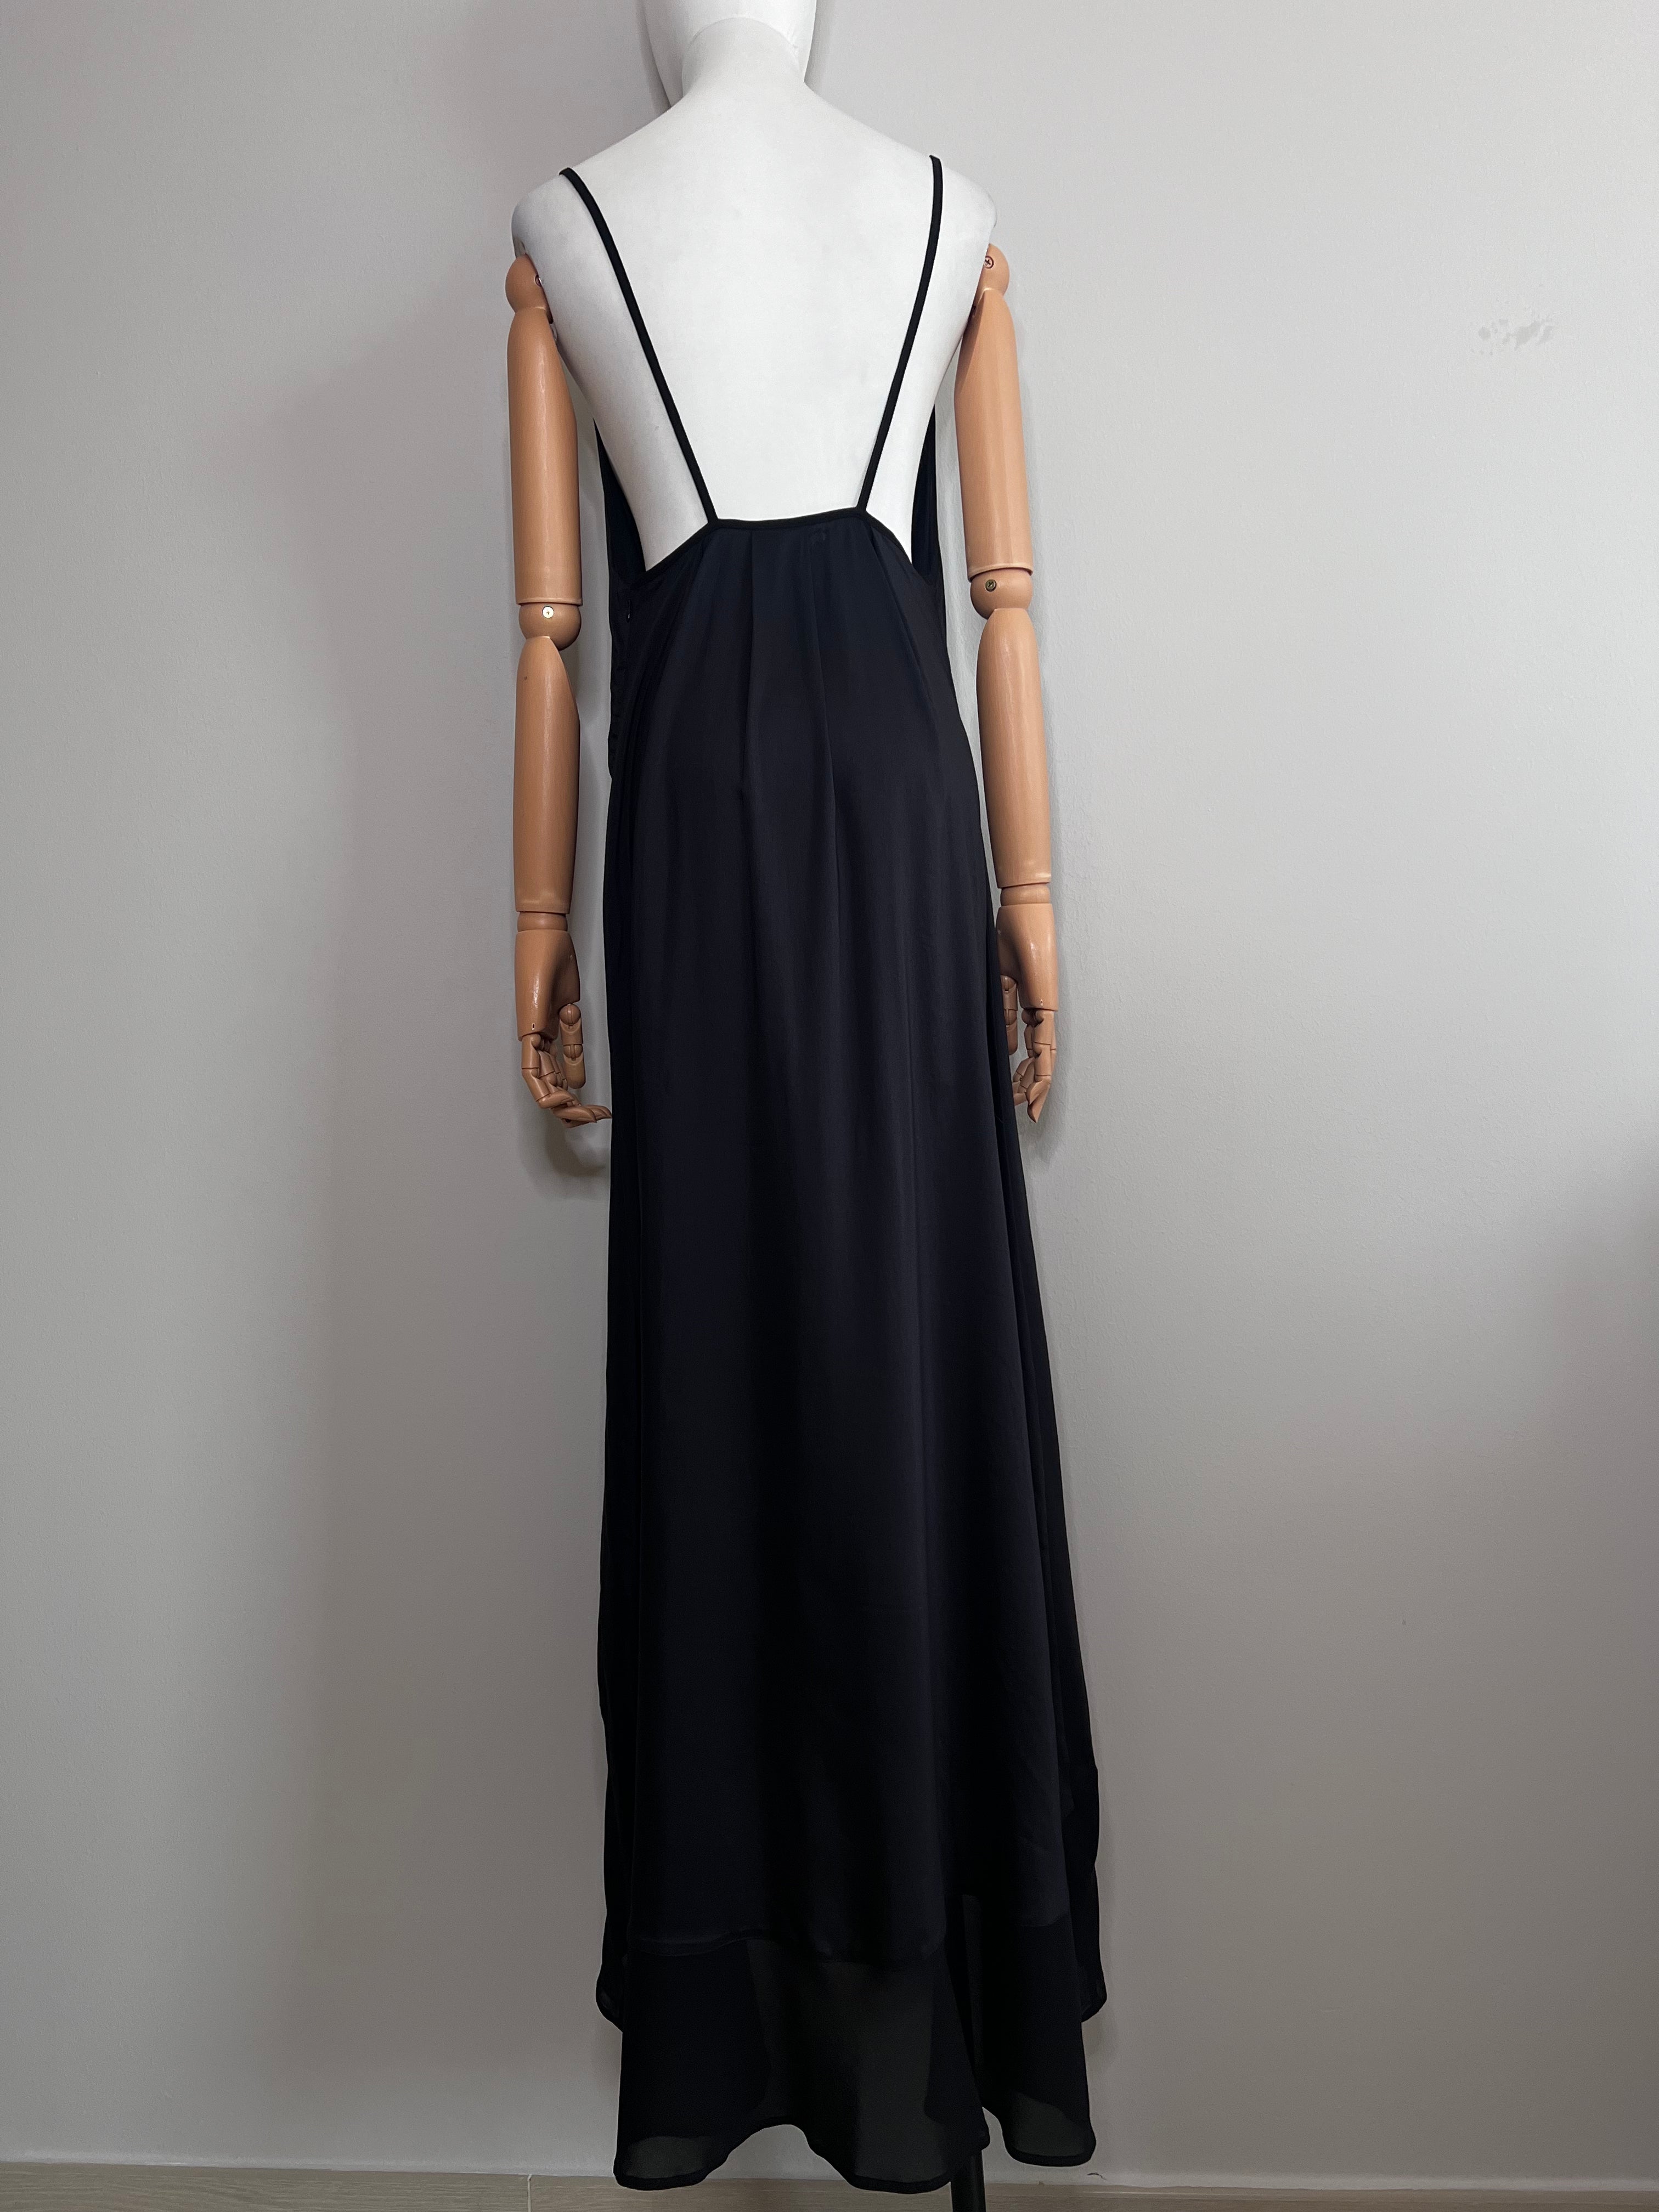 Black flowy v neck flowy long dress with silver stud design - LA PERLA